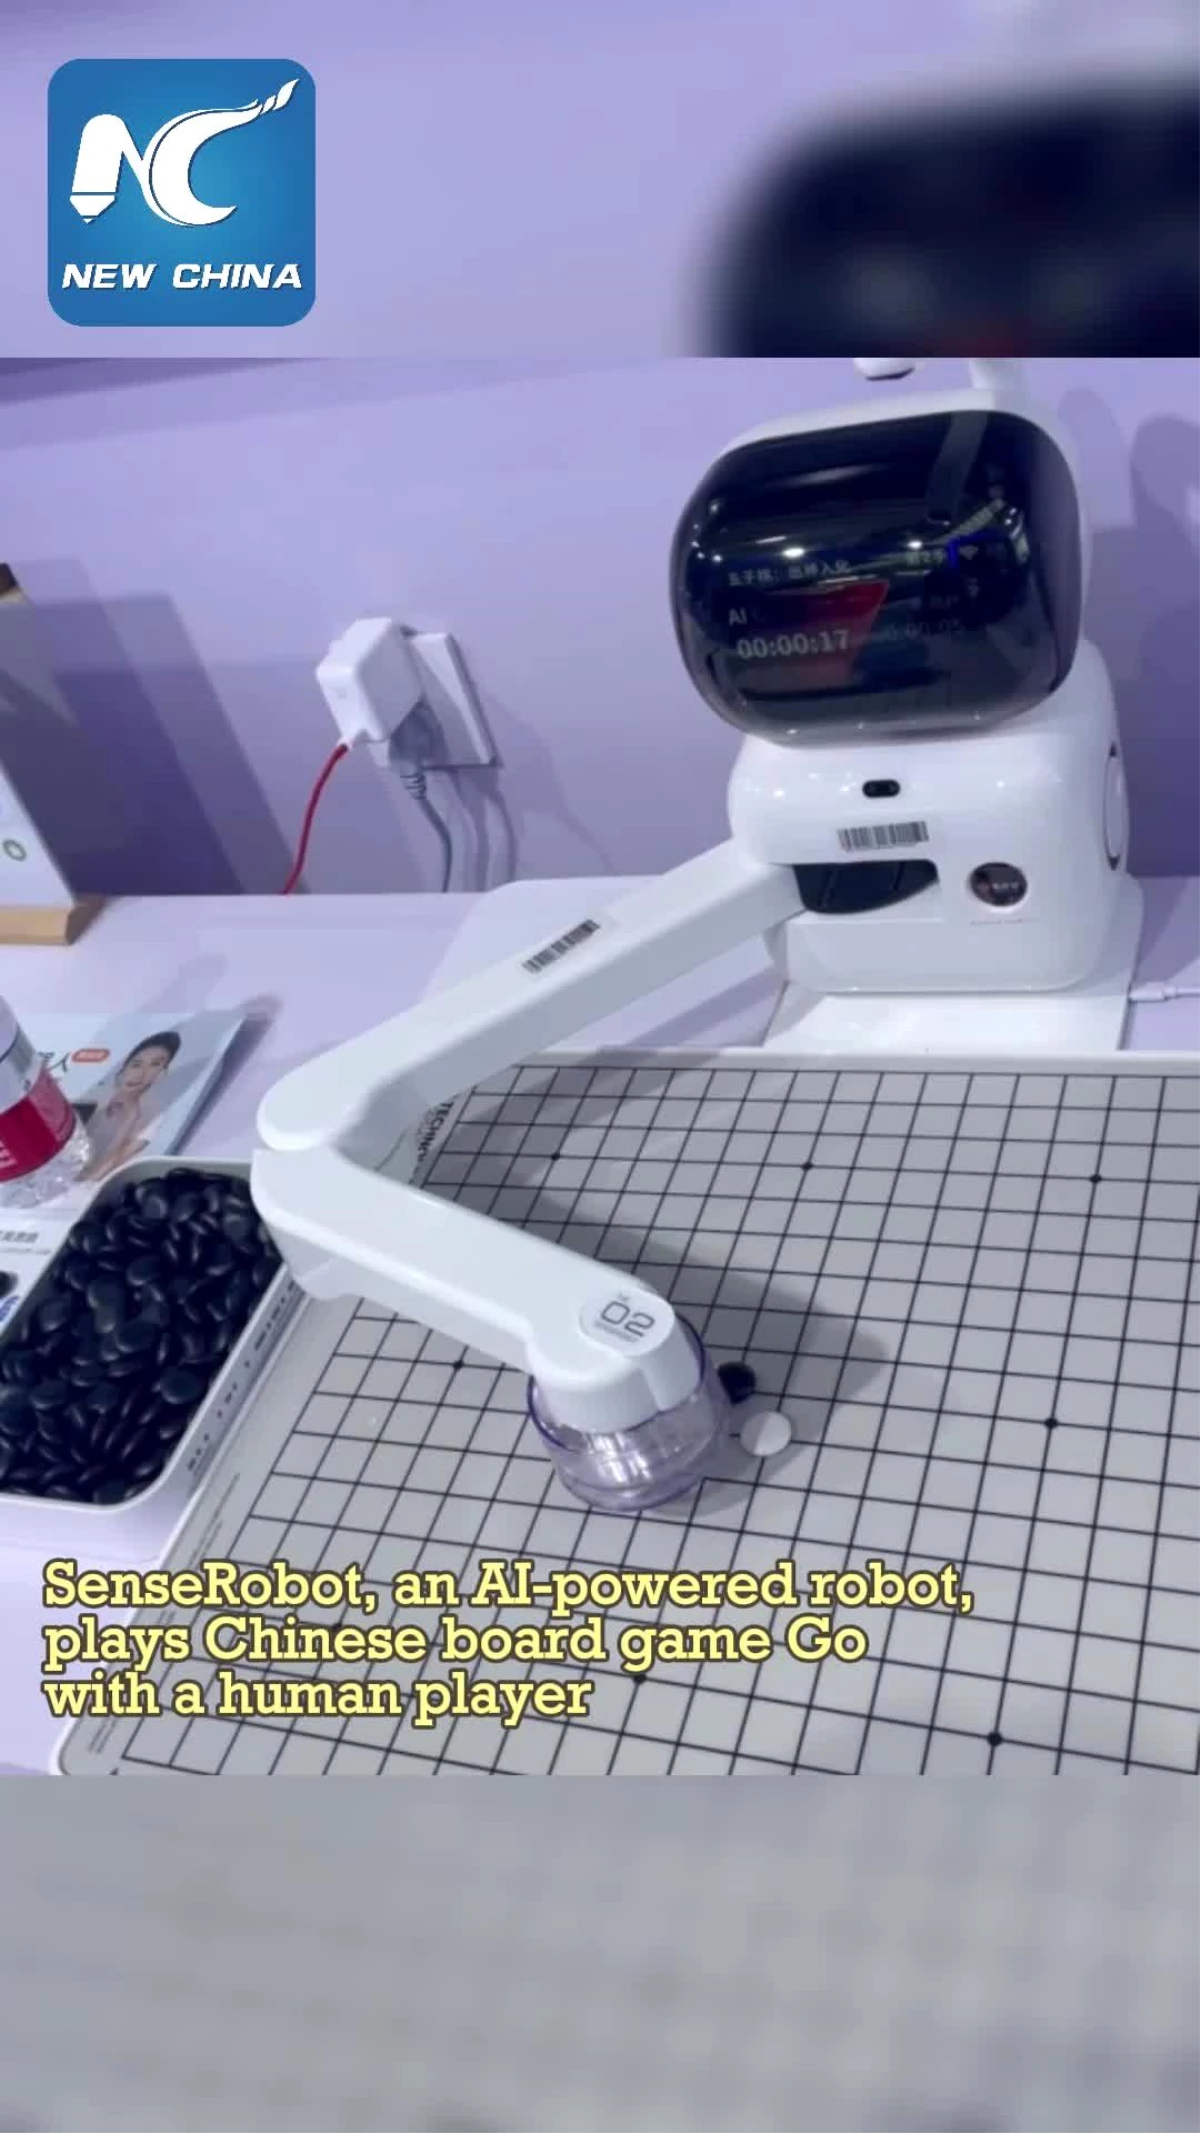 Yapay zeka destekli Go robotu SenseRobot sergilendi